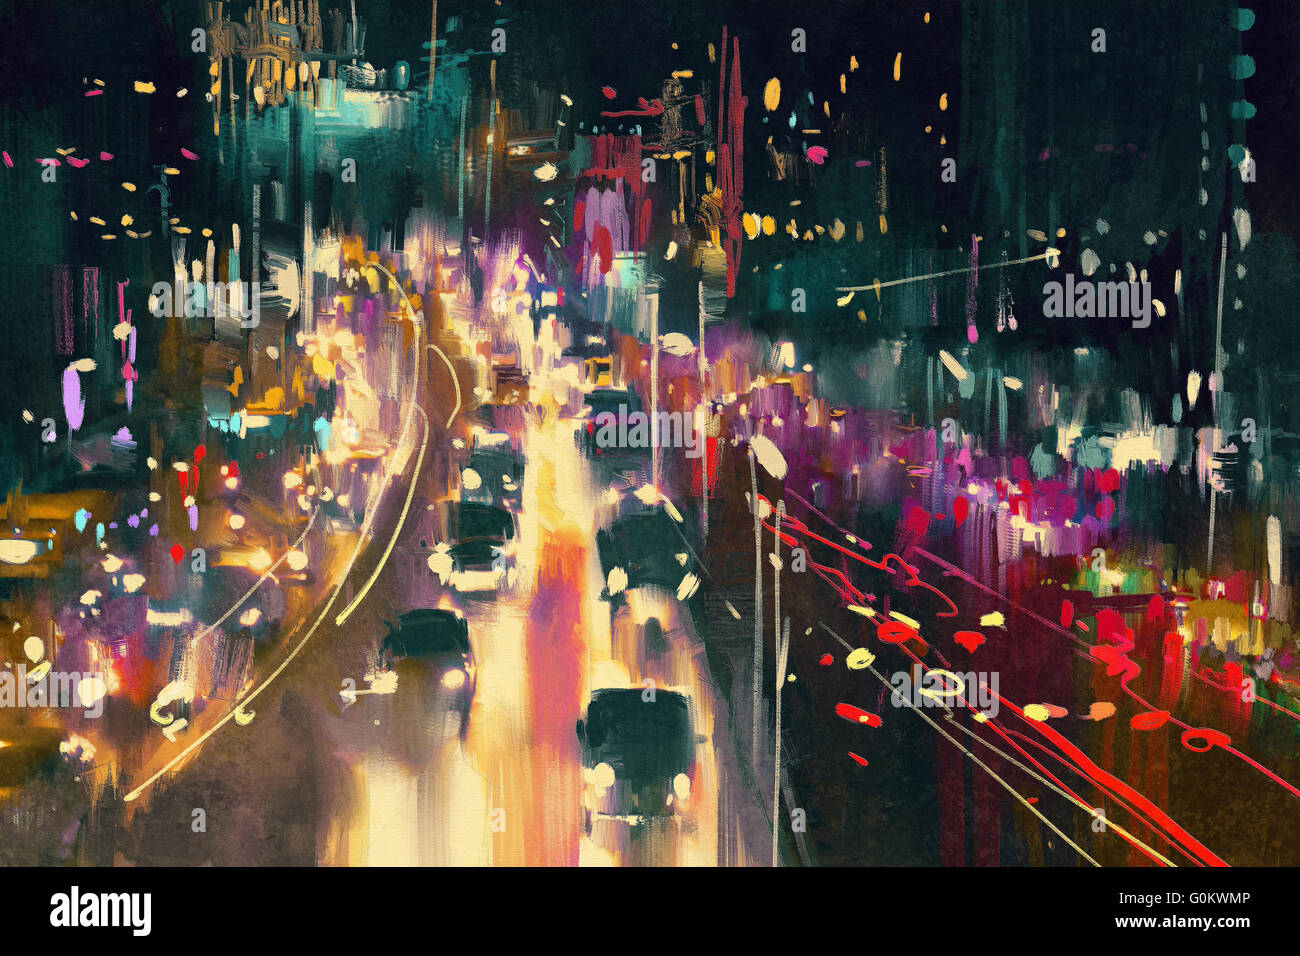 light trails on the street at night,illustration digital painting Stock Photo